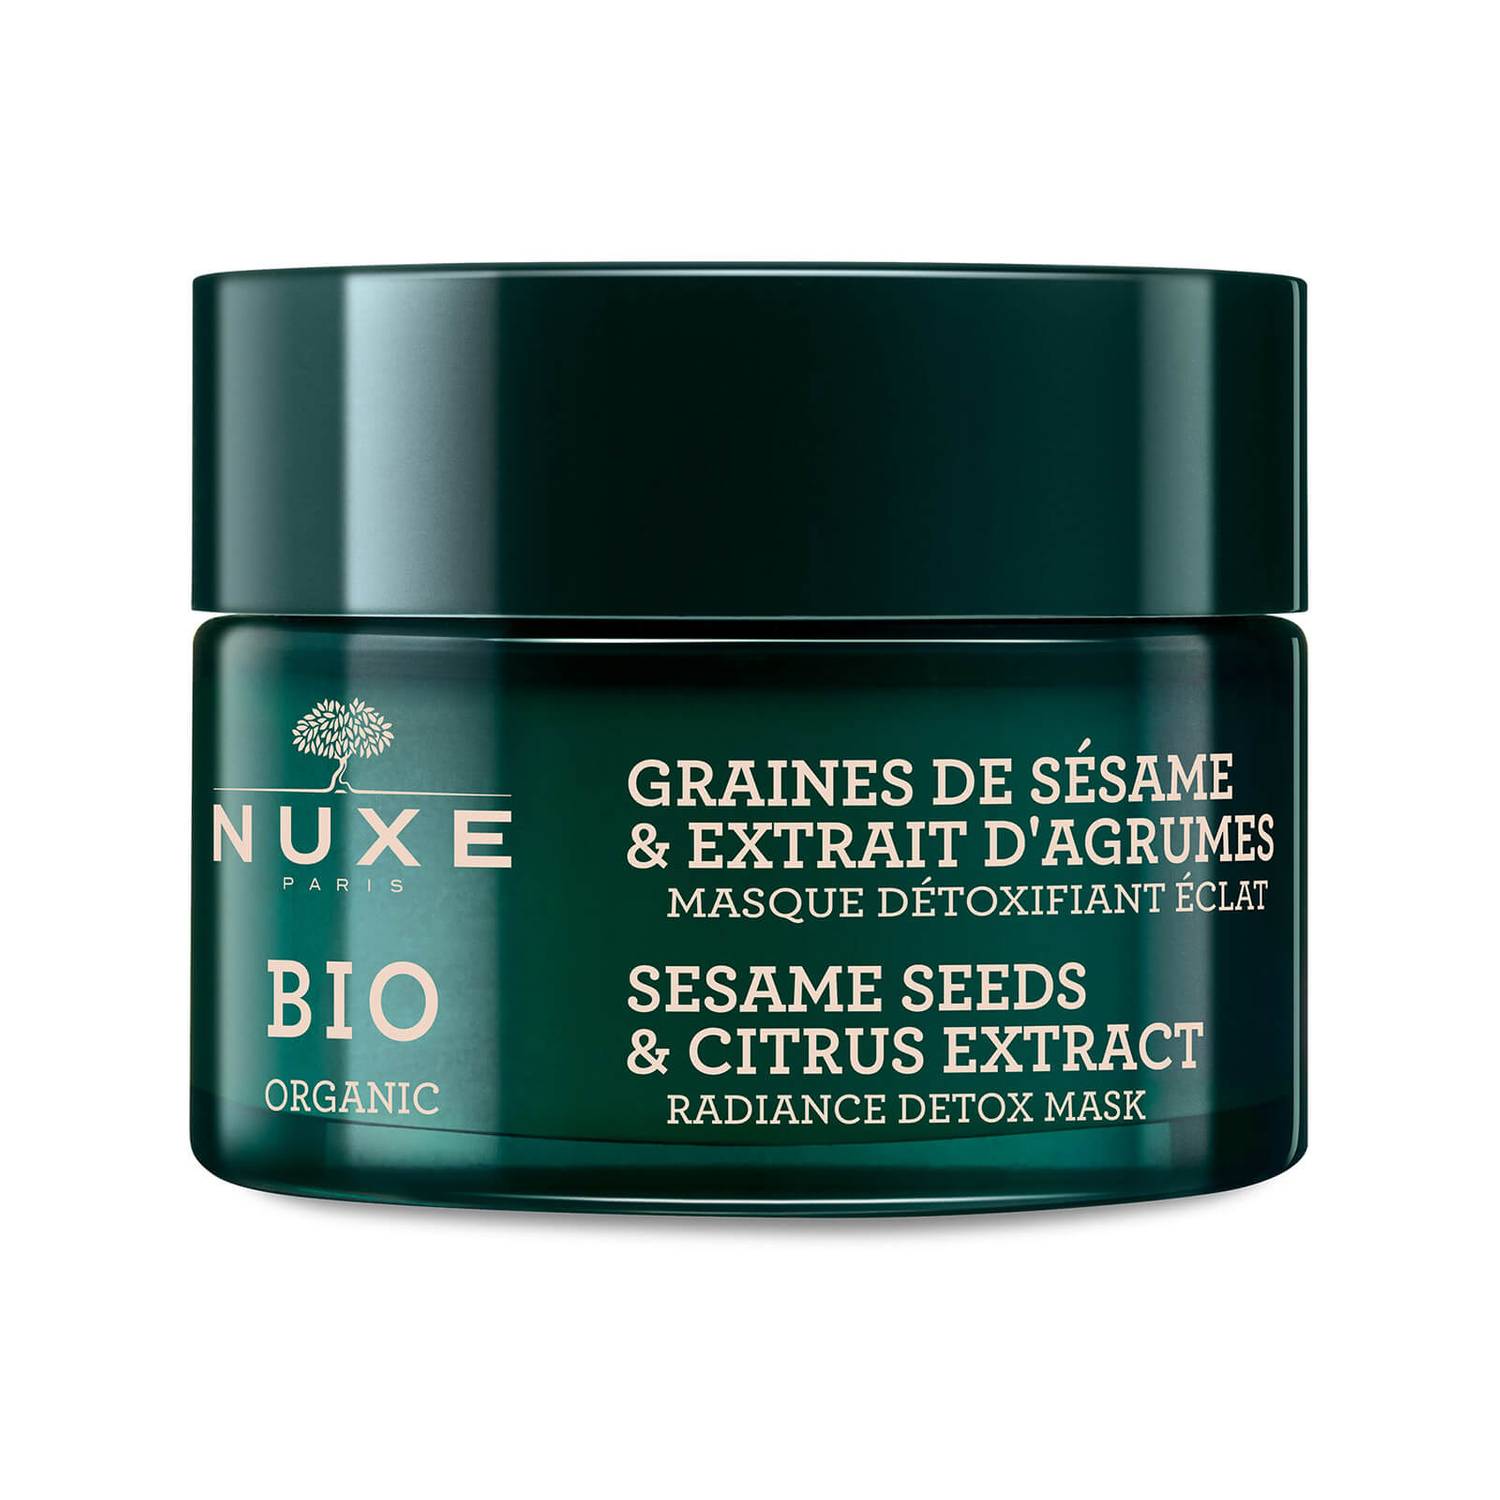 Nuxe Bio Organic Sesame Seeds & Citrus Extract Radiance Detox Mask 50ml - Feel Gorgeous